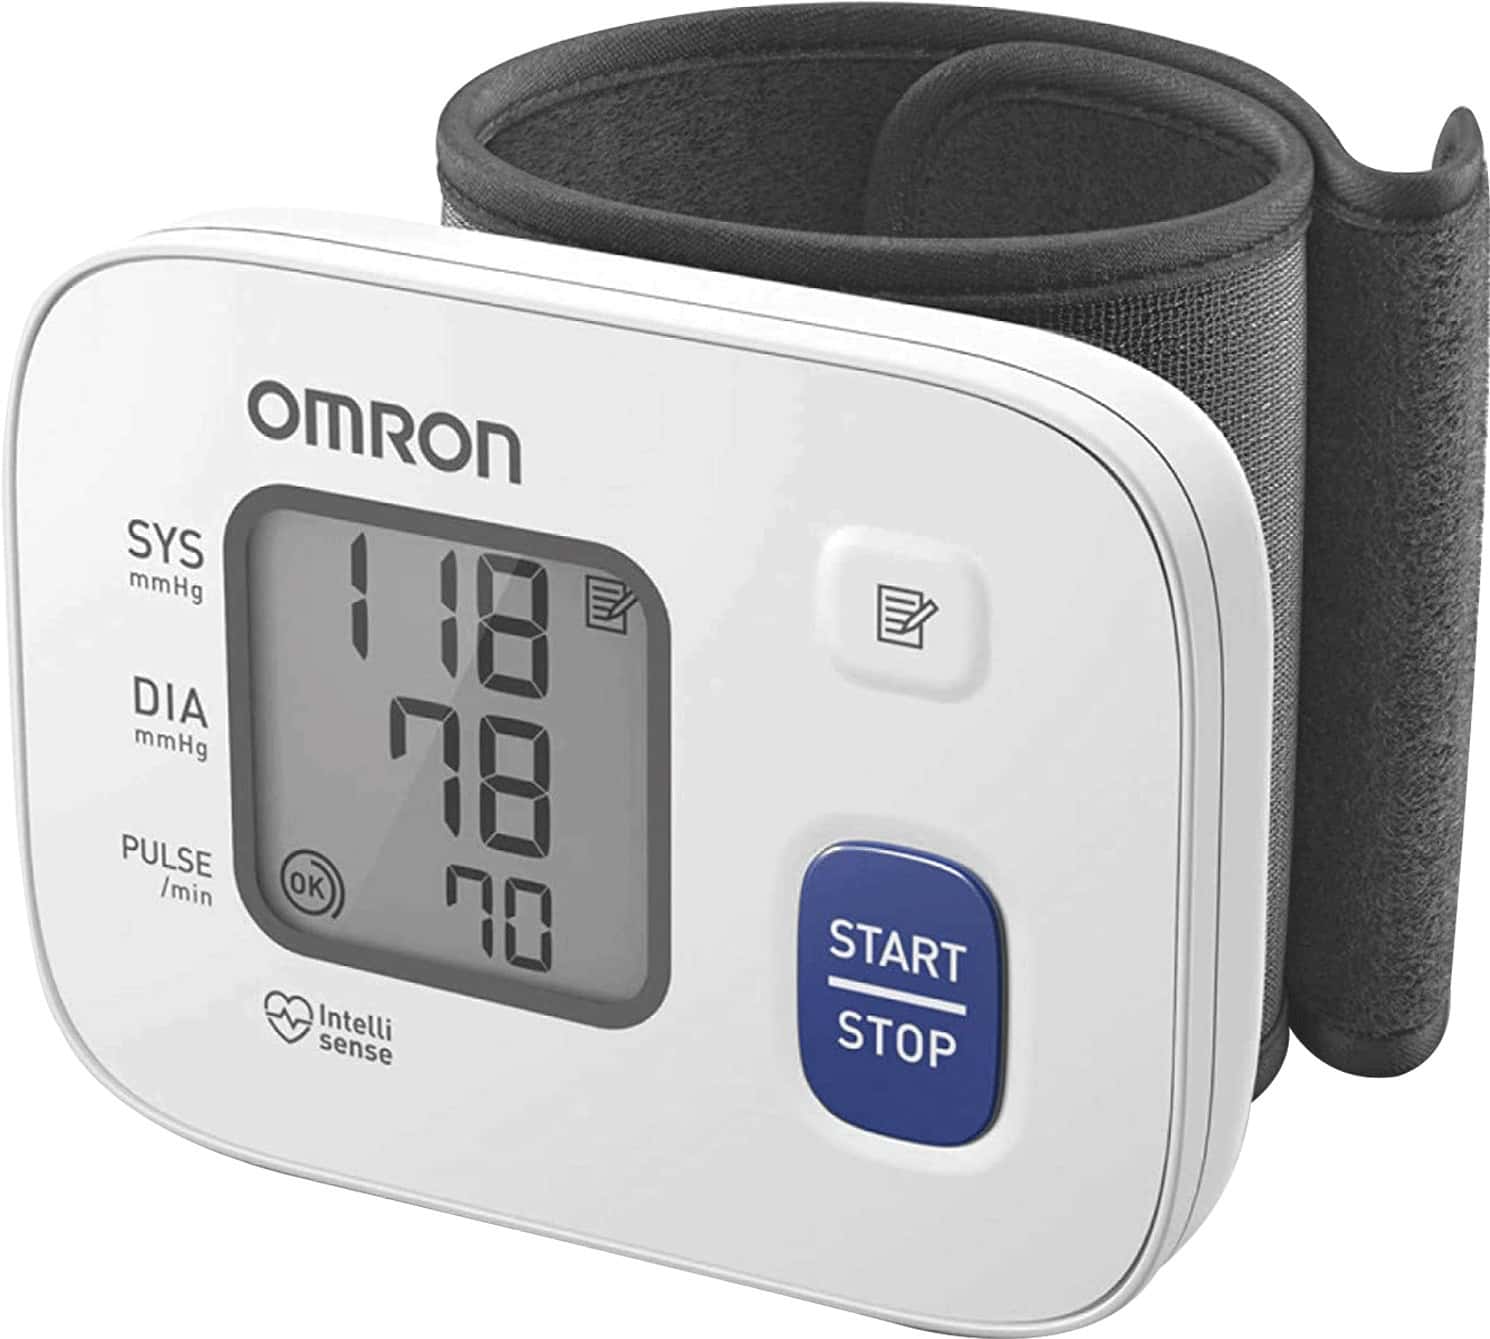 Omron Hem 6161 Fully Automatic Wrist Blood Pressure Monitor With Intellisense Technology